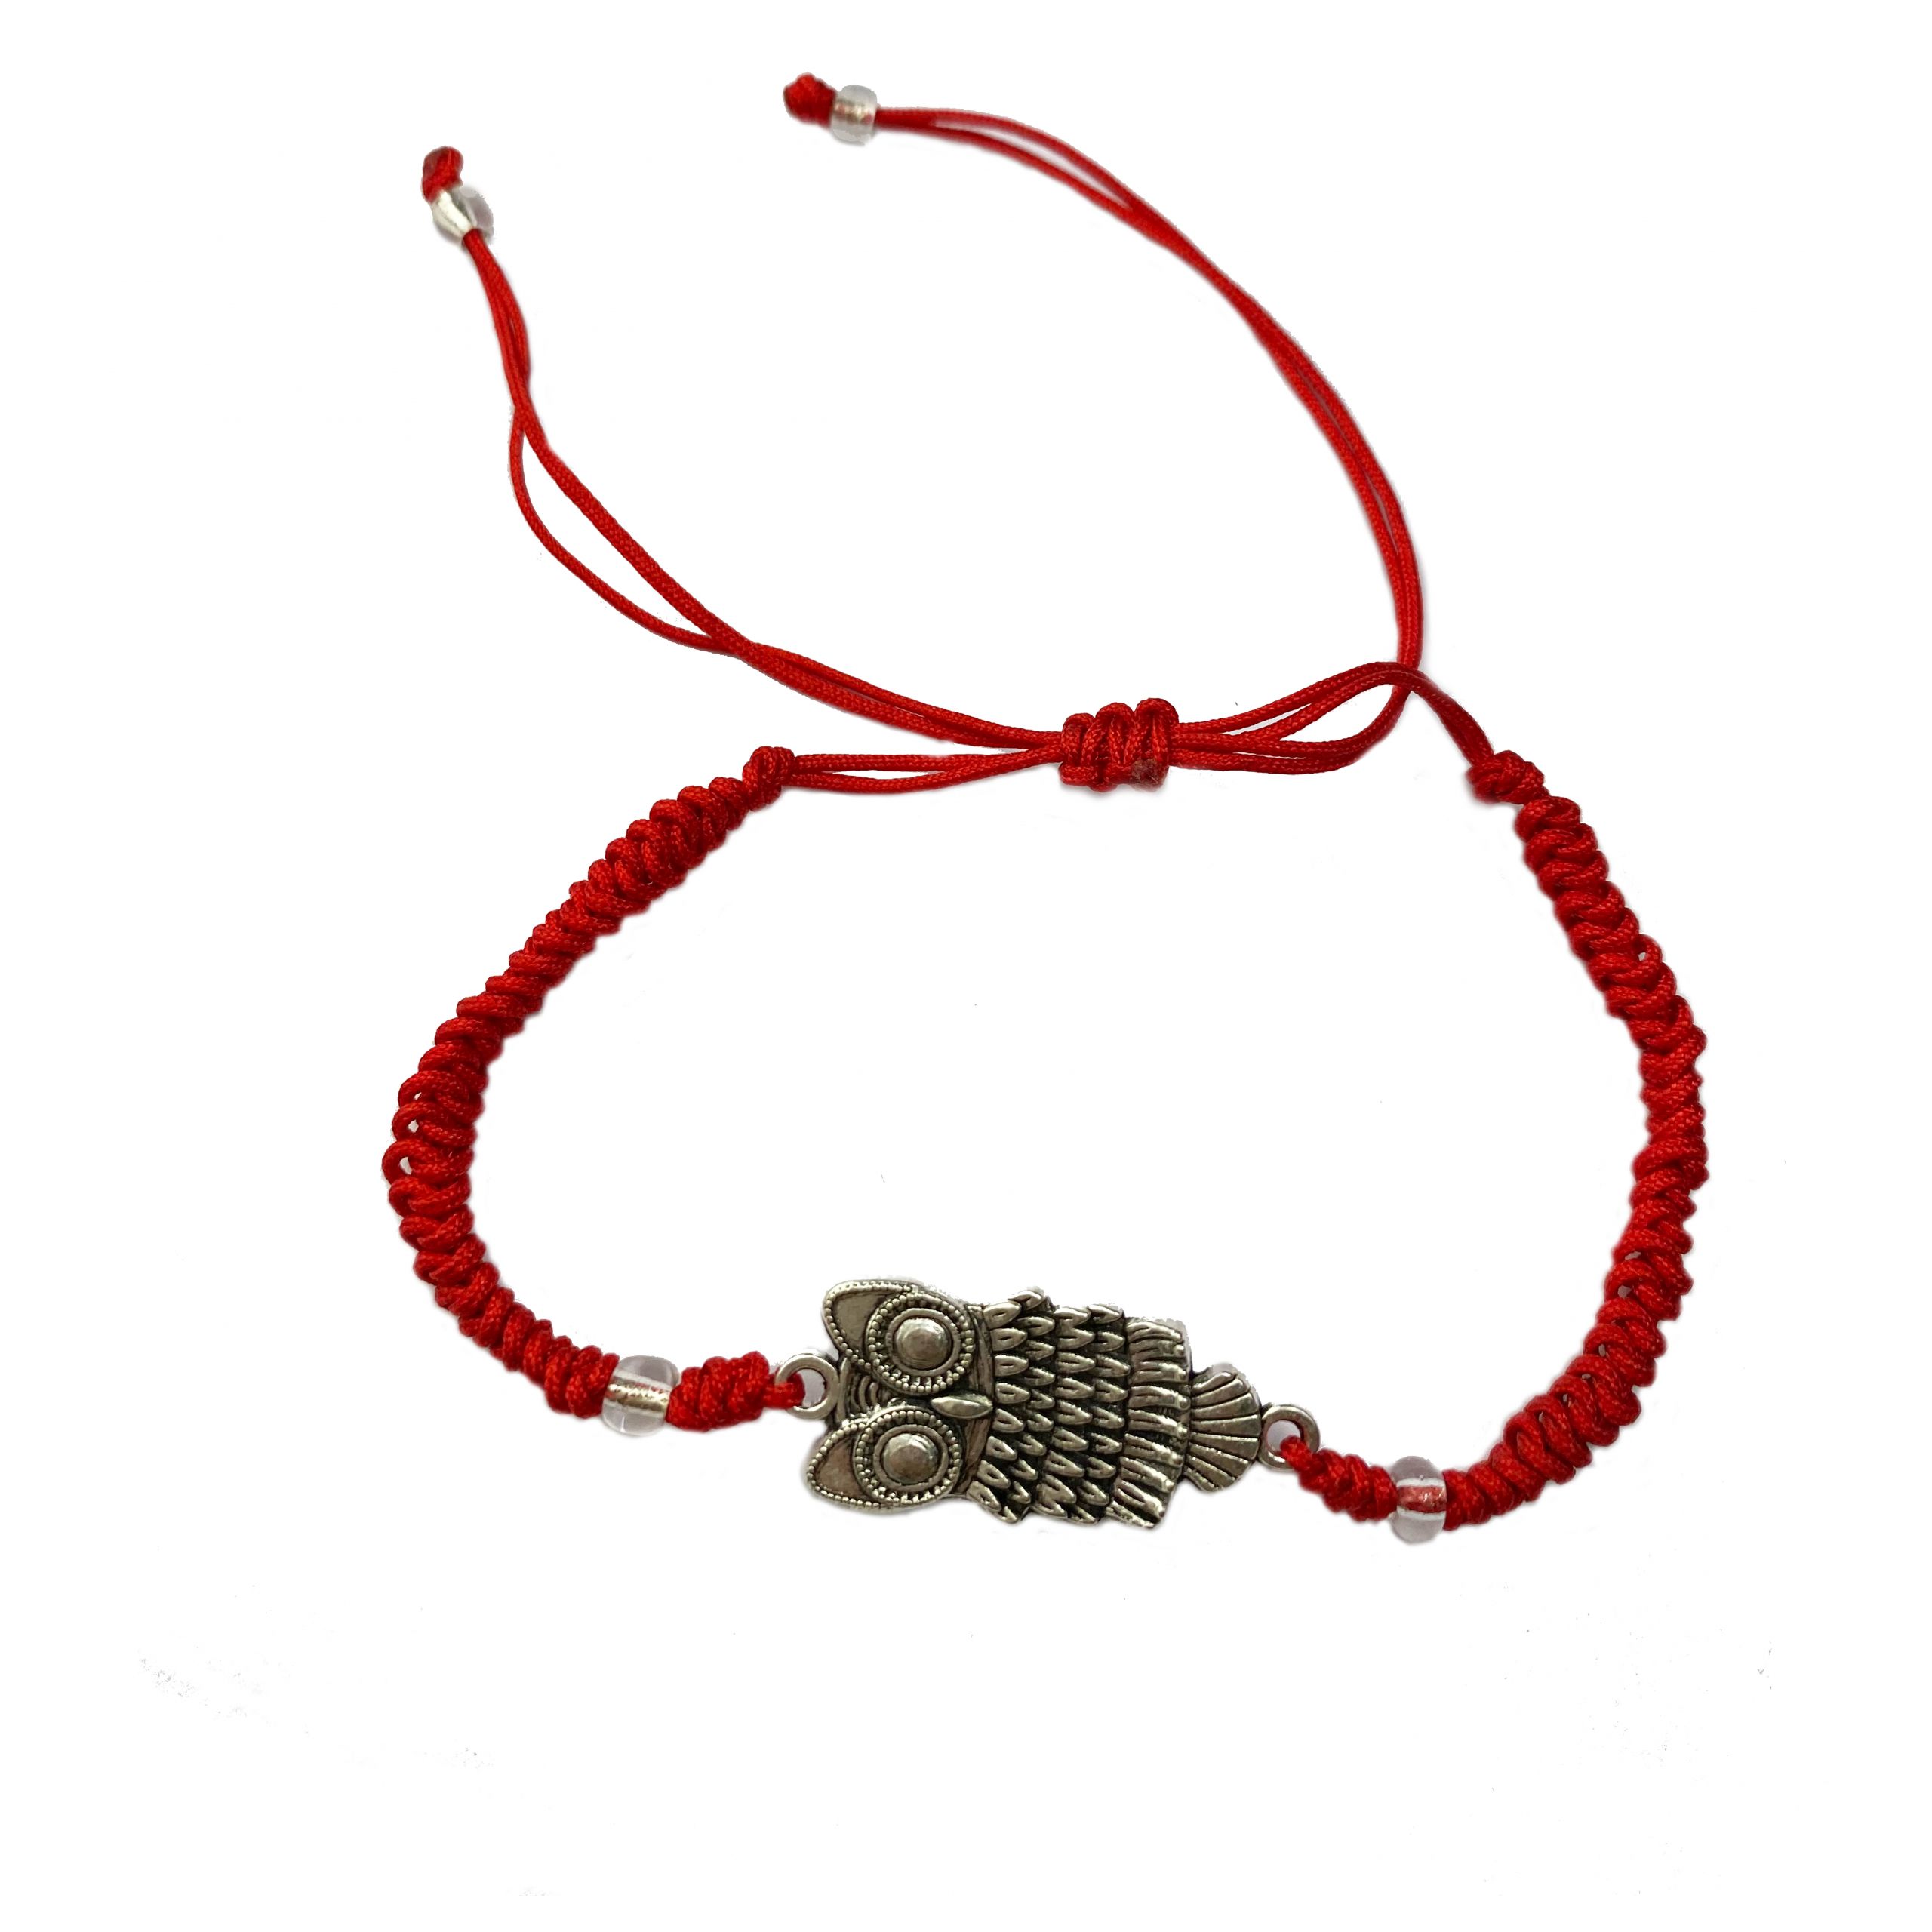 Owl Charm Bracelet with Fishtail Fabric